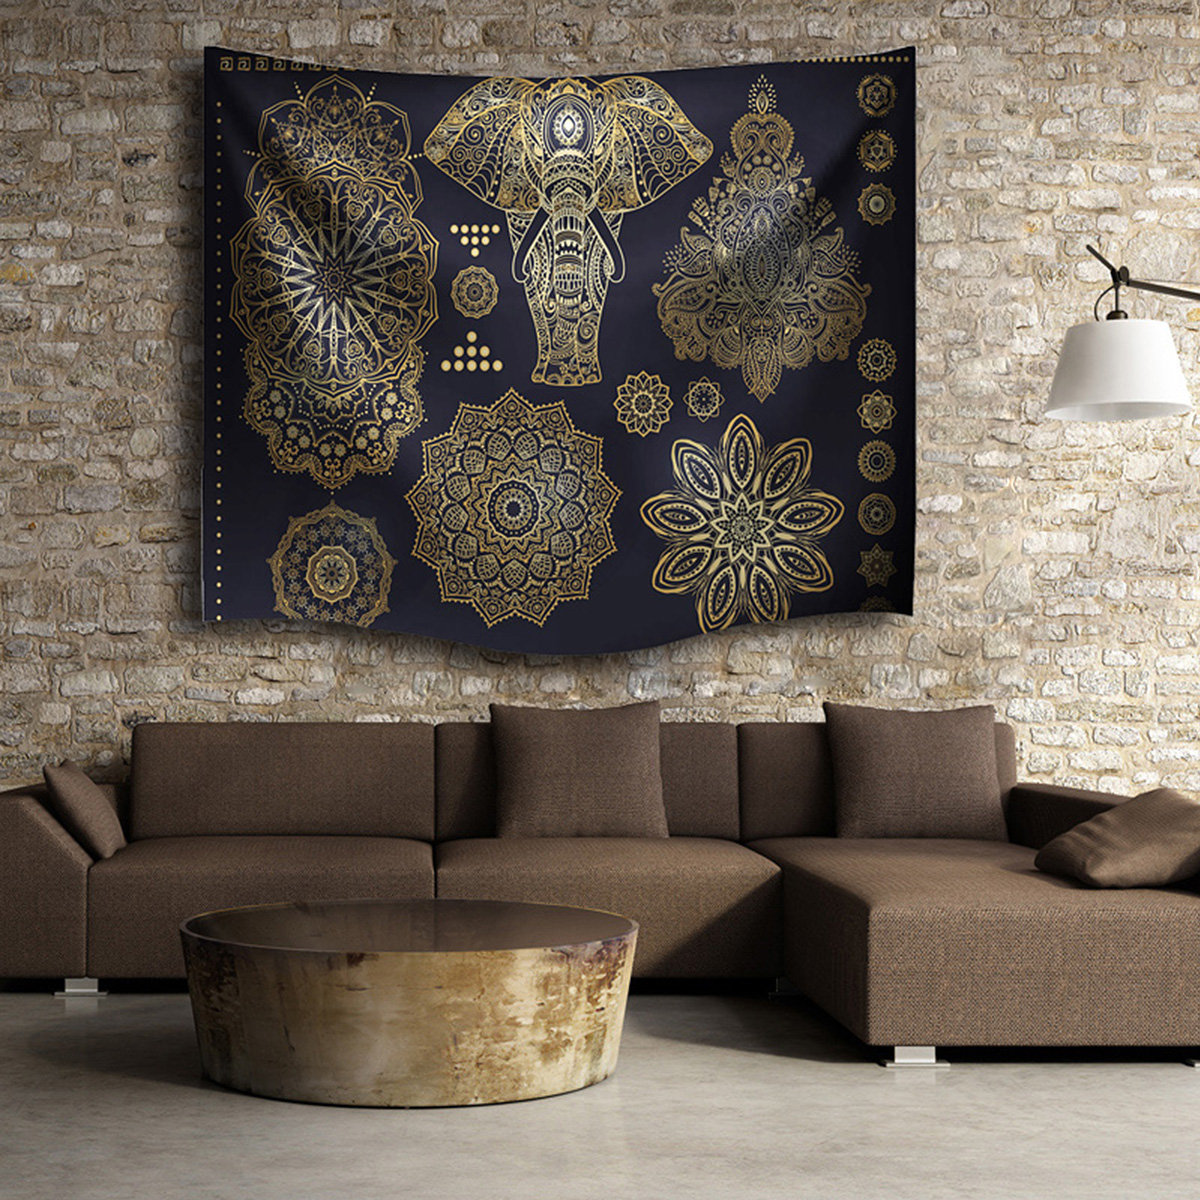 

Indian Mandala Elephant Beach Towel Tapestry Wall Hanging Throw Dorm Bedspread Mat Decor